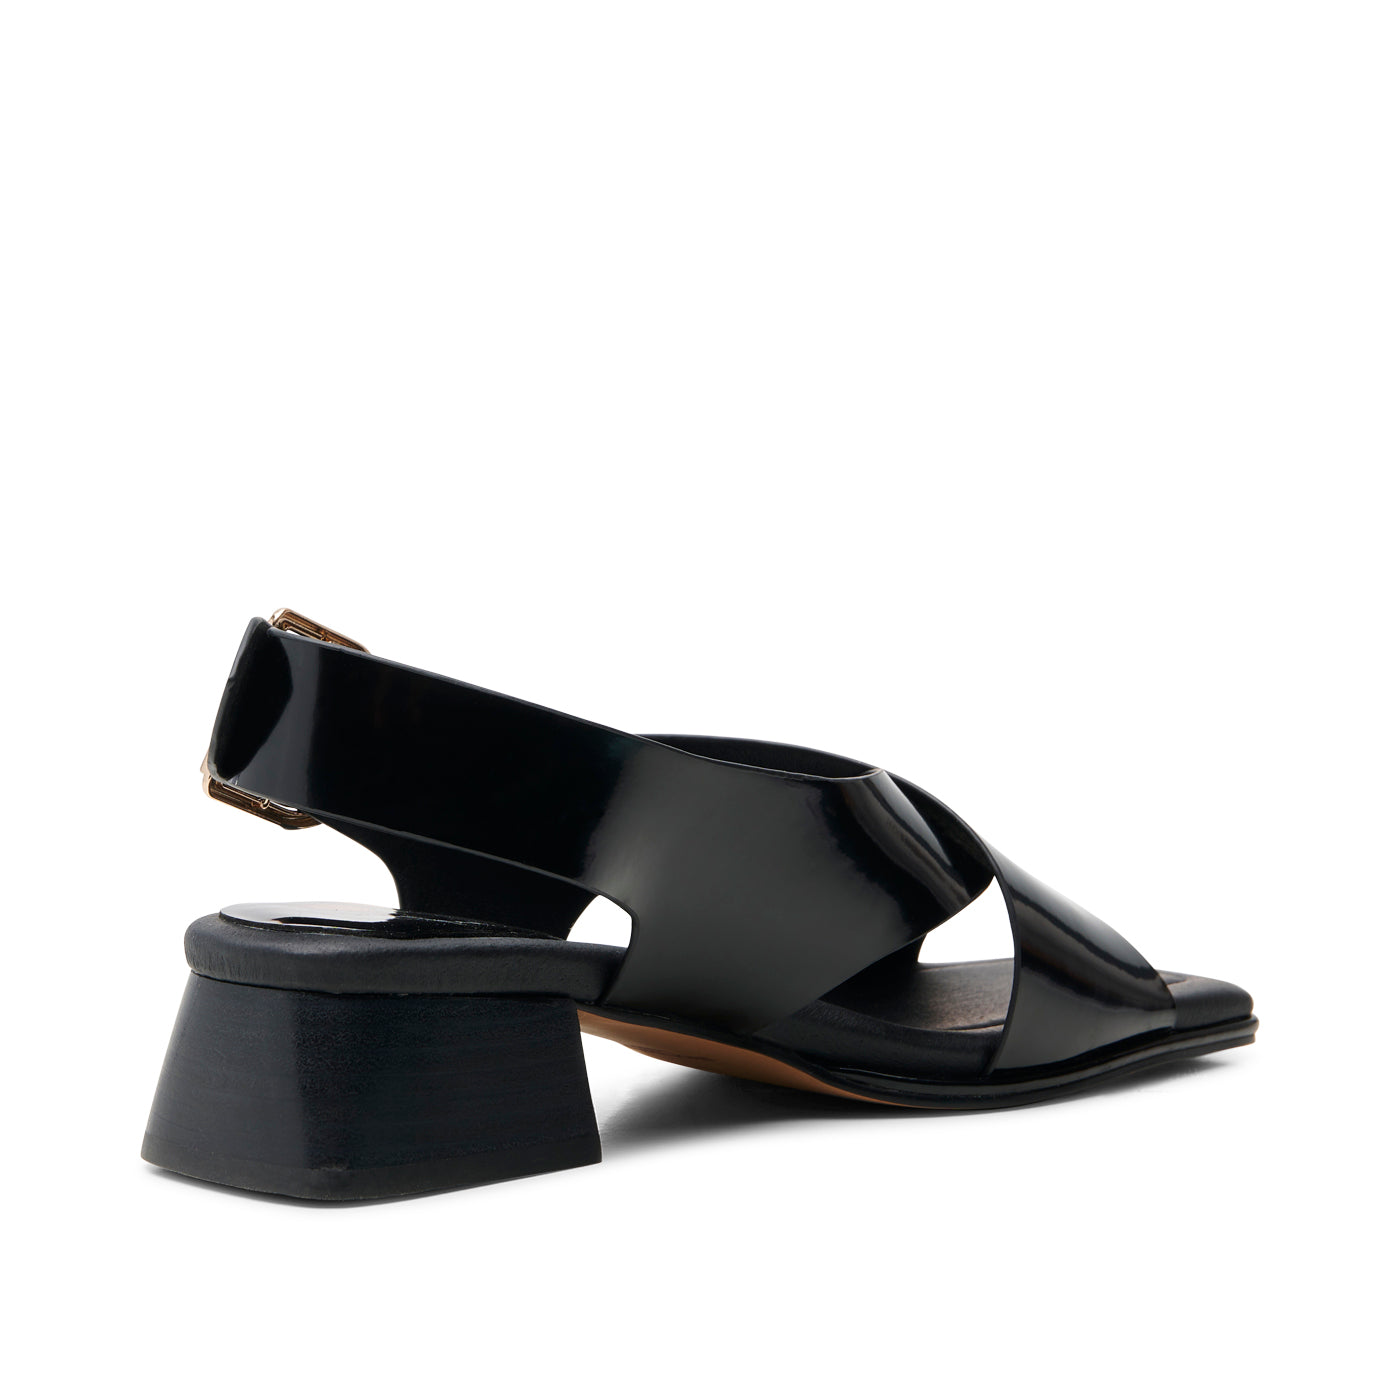 SHOE THE BEAR WOMENS Colette sandal leather Sandals 110 BLACK